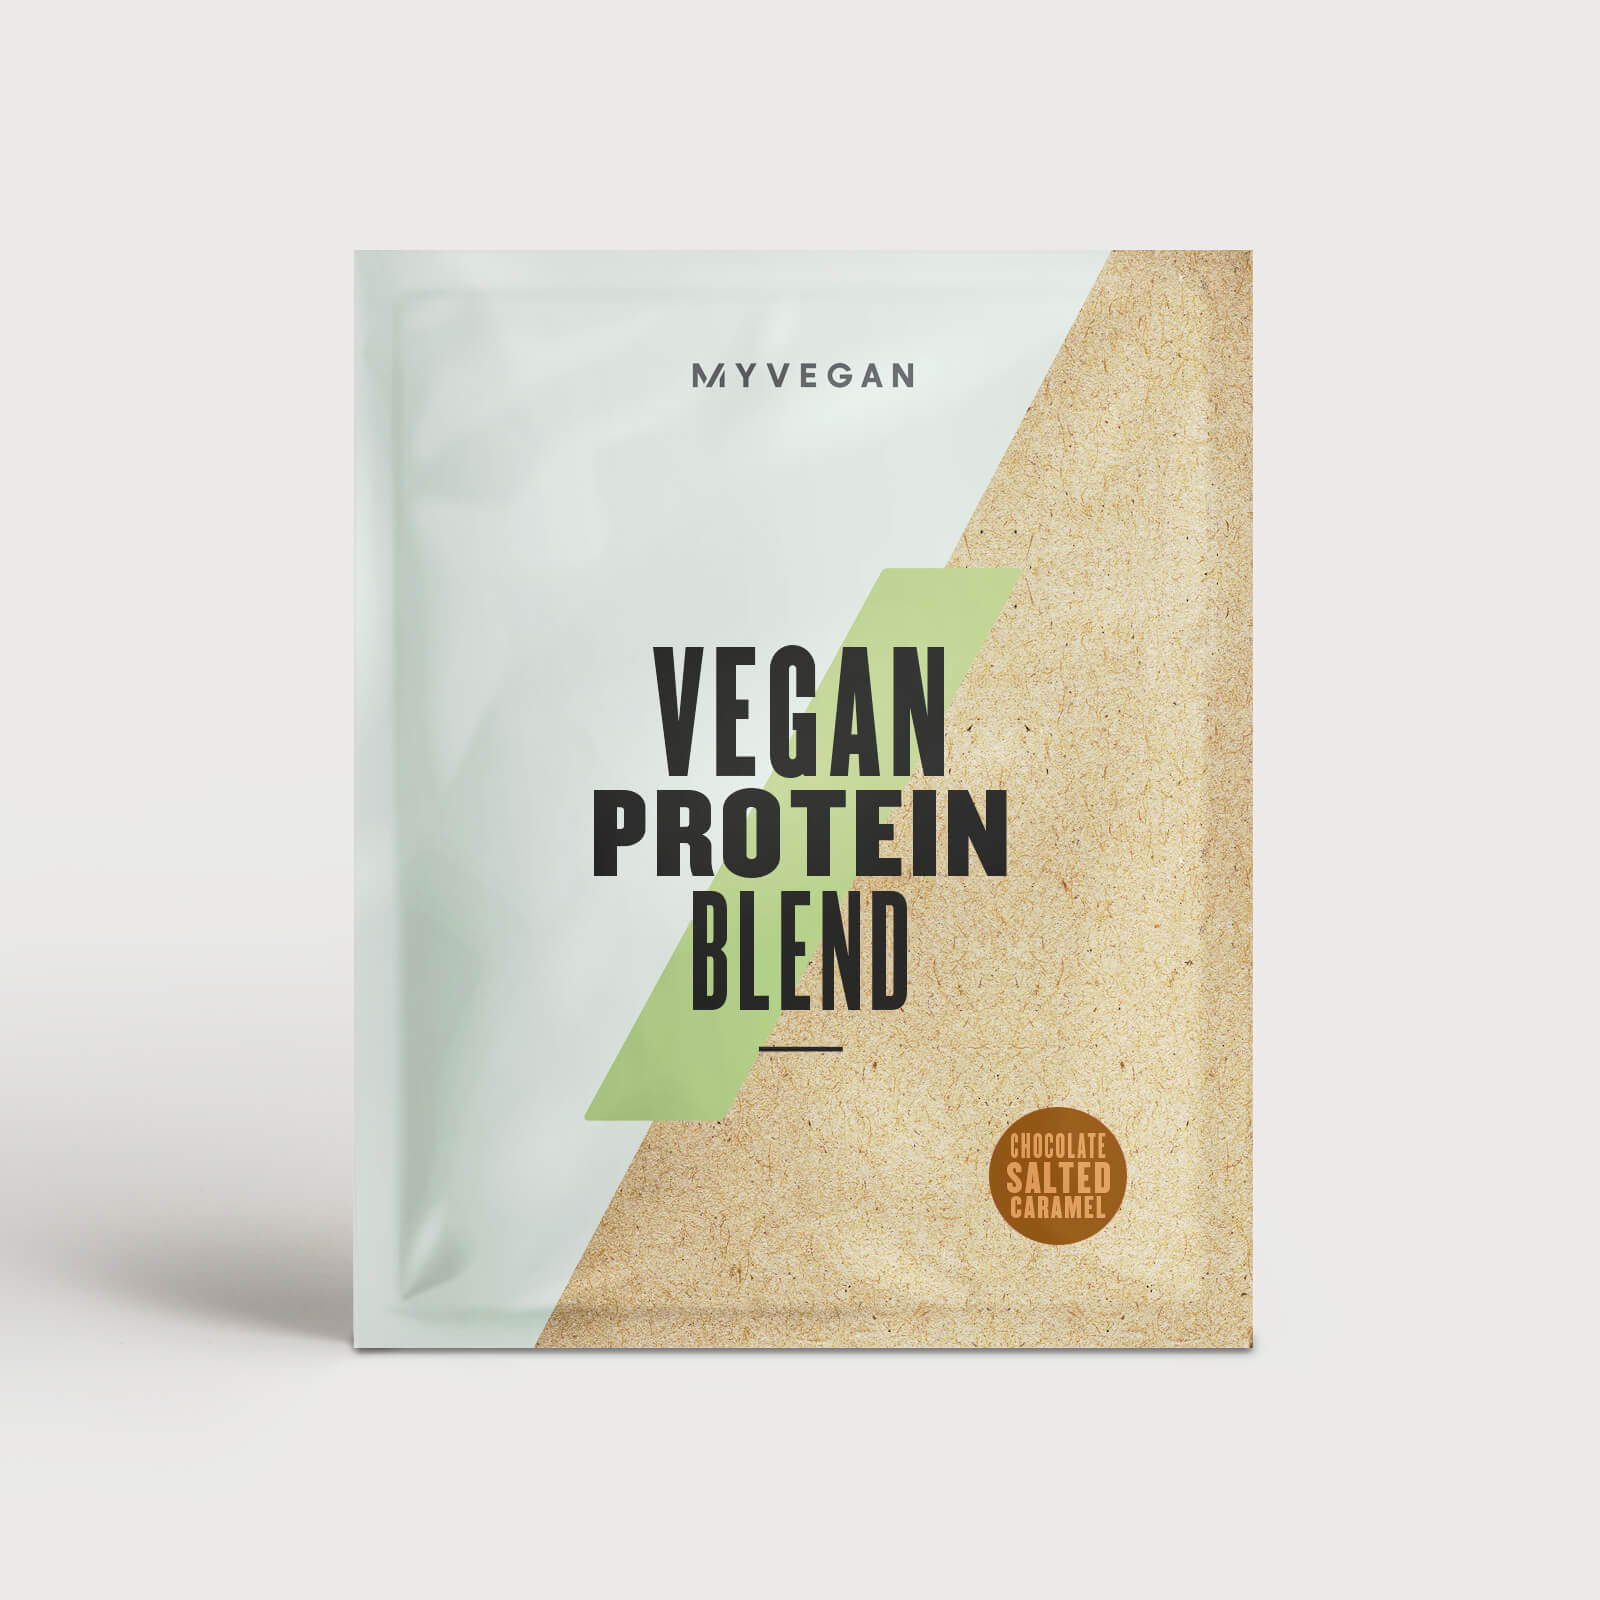 Myvegan Vegan Protein Blend (Sample) - Chocolate Salted Caramel